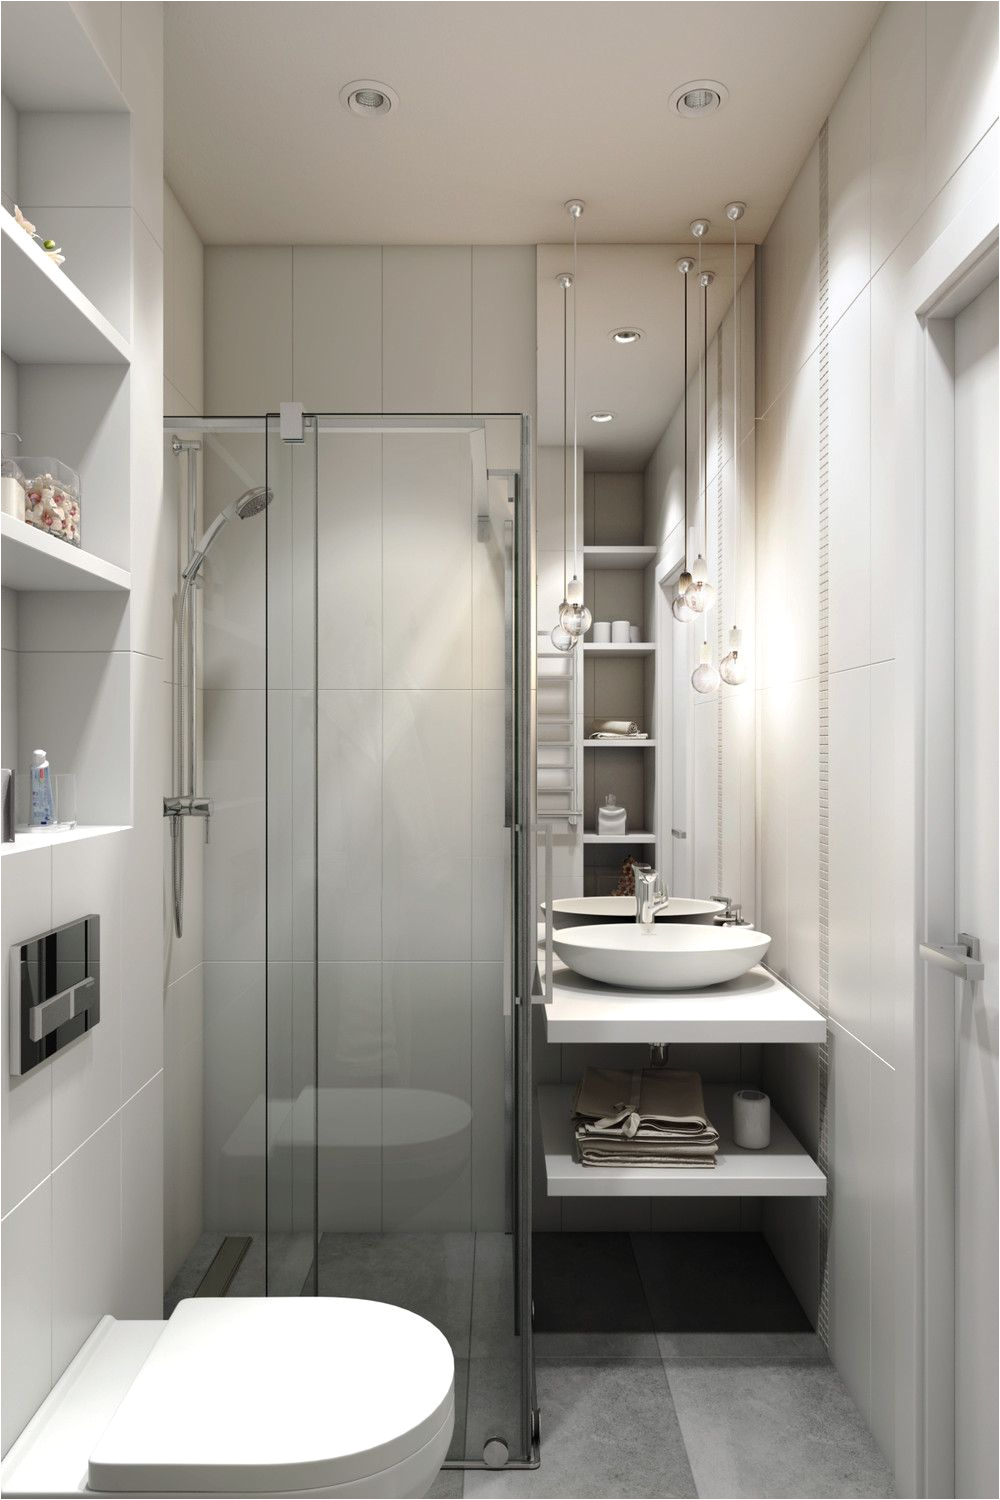 Compact Bathtubs Small Bathrooms 2 Small Apartment with Modern Minimalist Interior Design